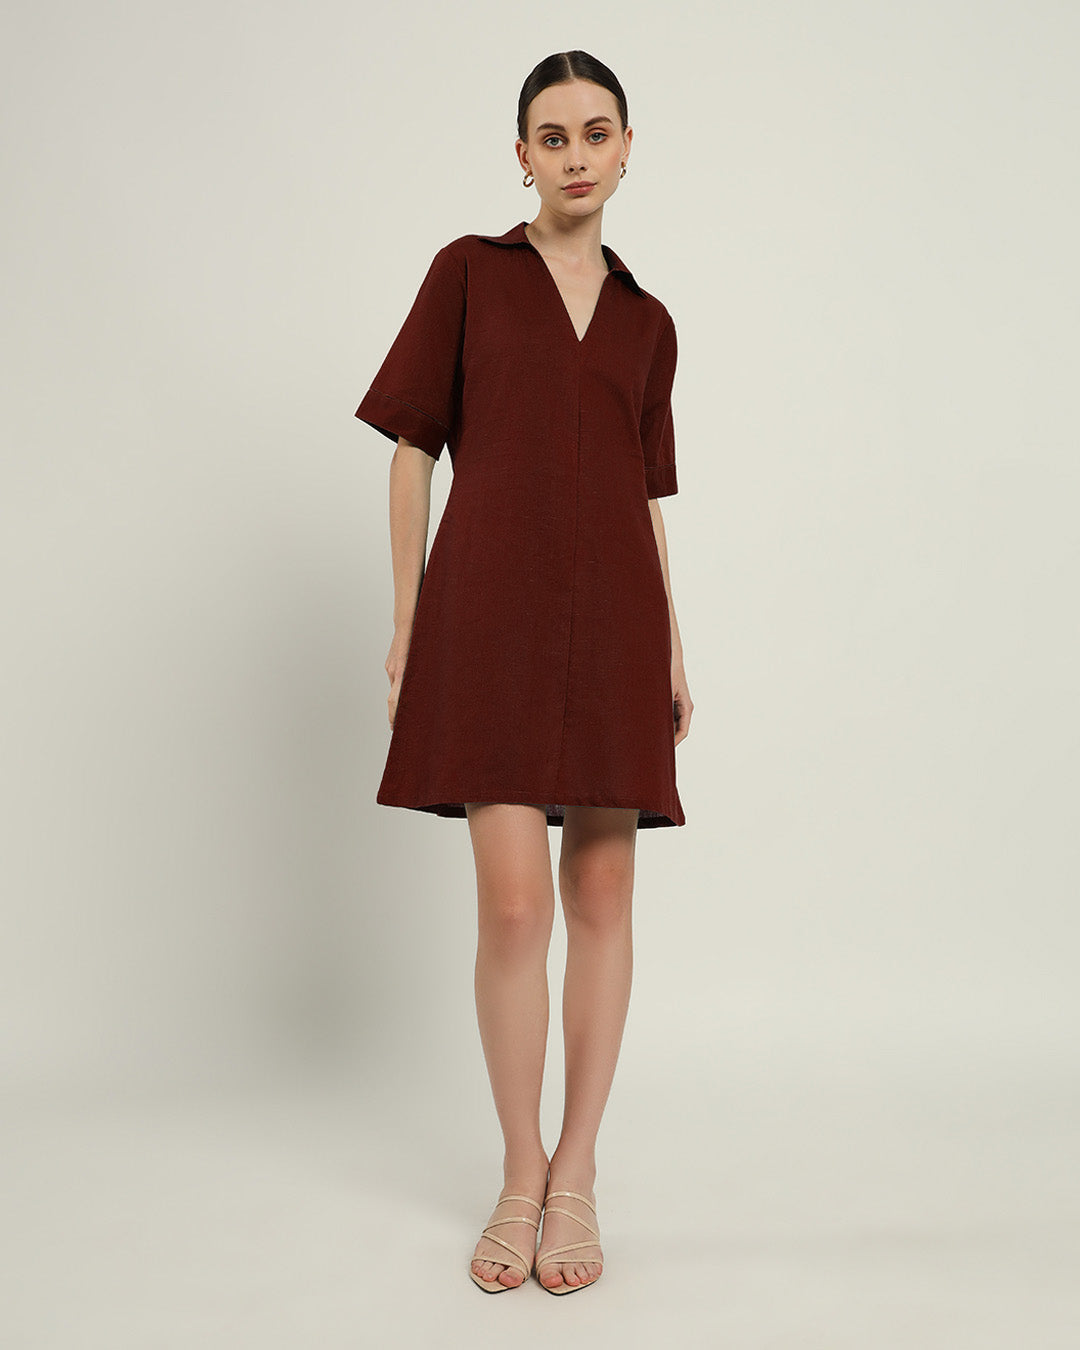 The Ermont Rouge Cotton Dress